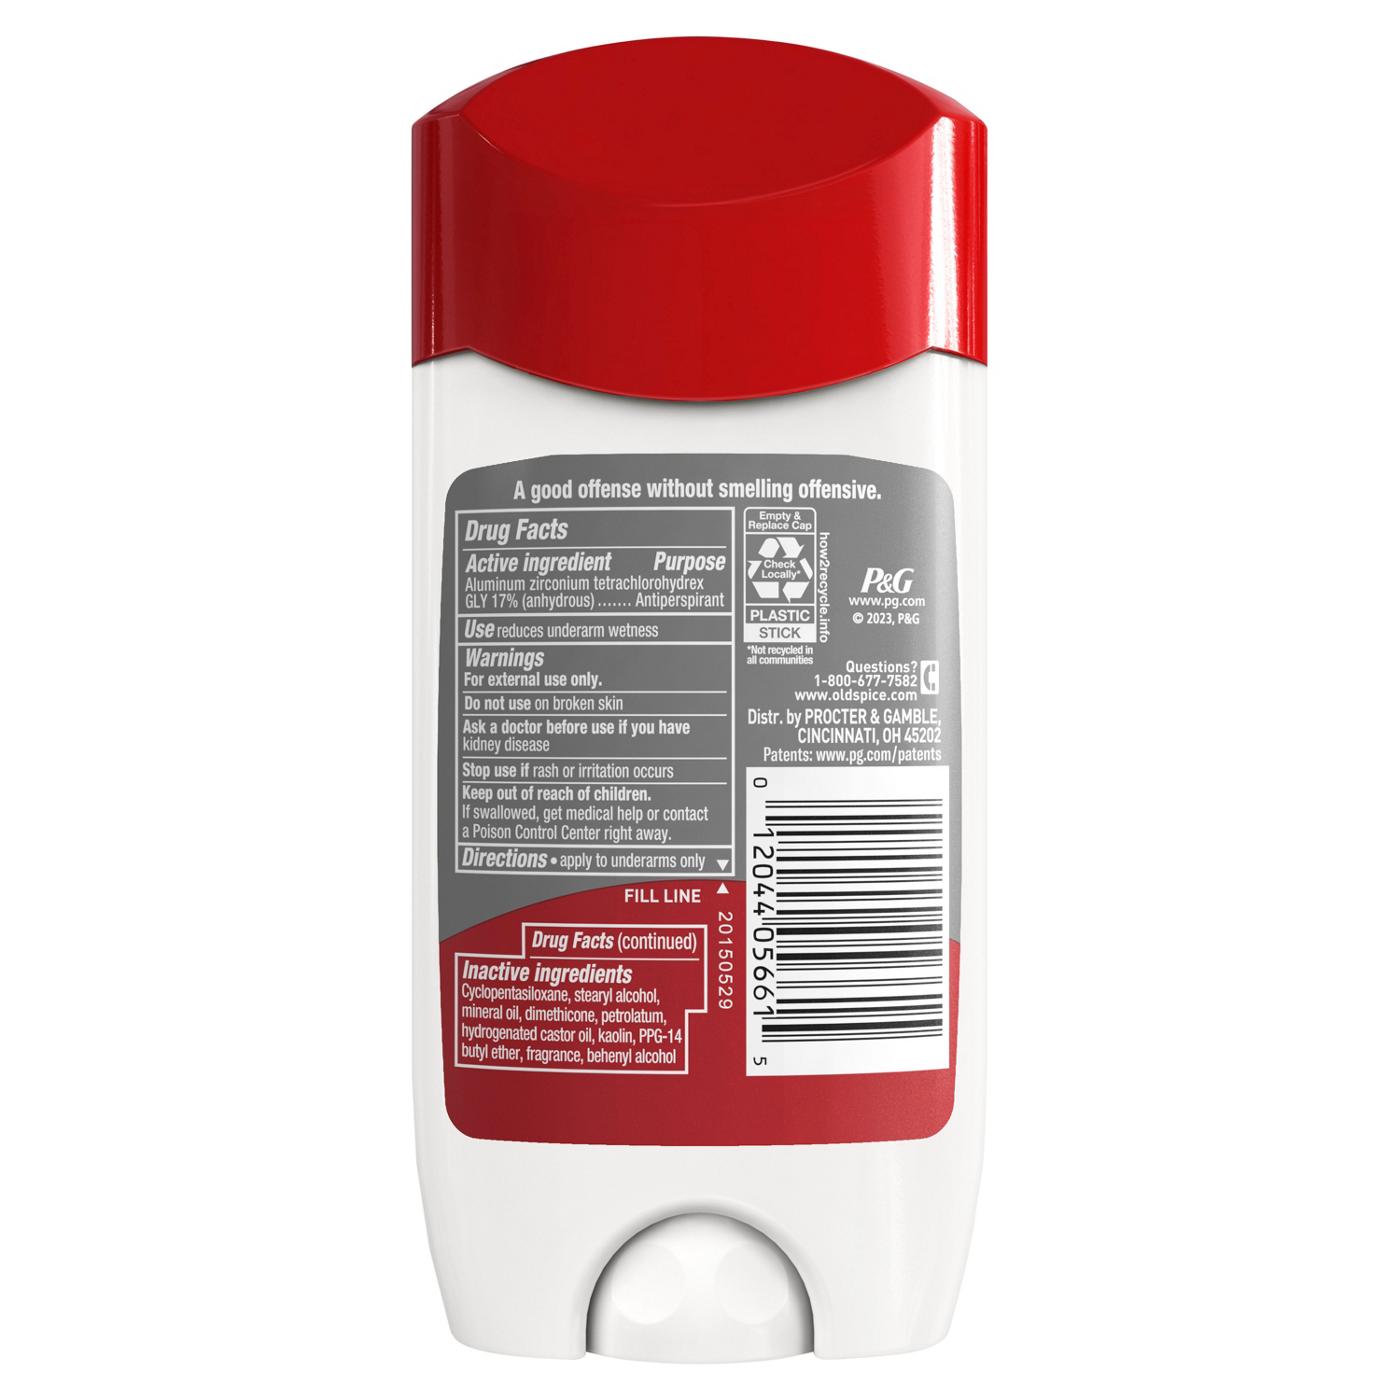 Old Spice Pure Sport Antiperspirant Deodorant; image 2 of 2